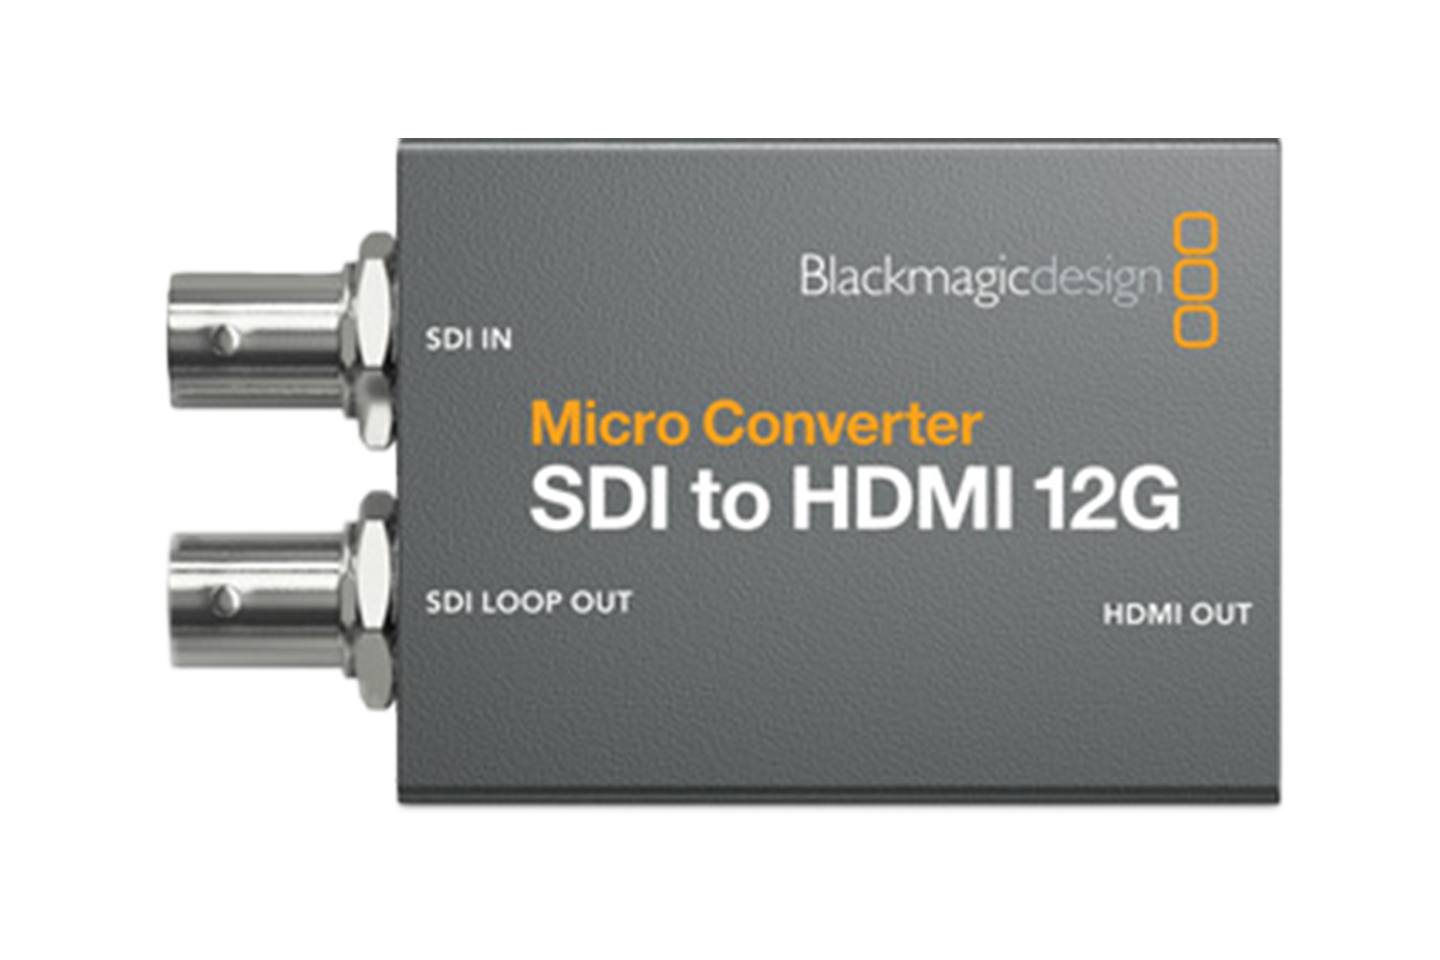 Blackmagic Design SDI to HDMI 12G(micro converter)